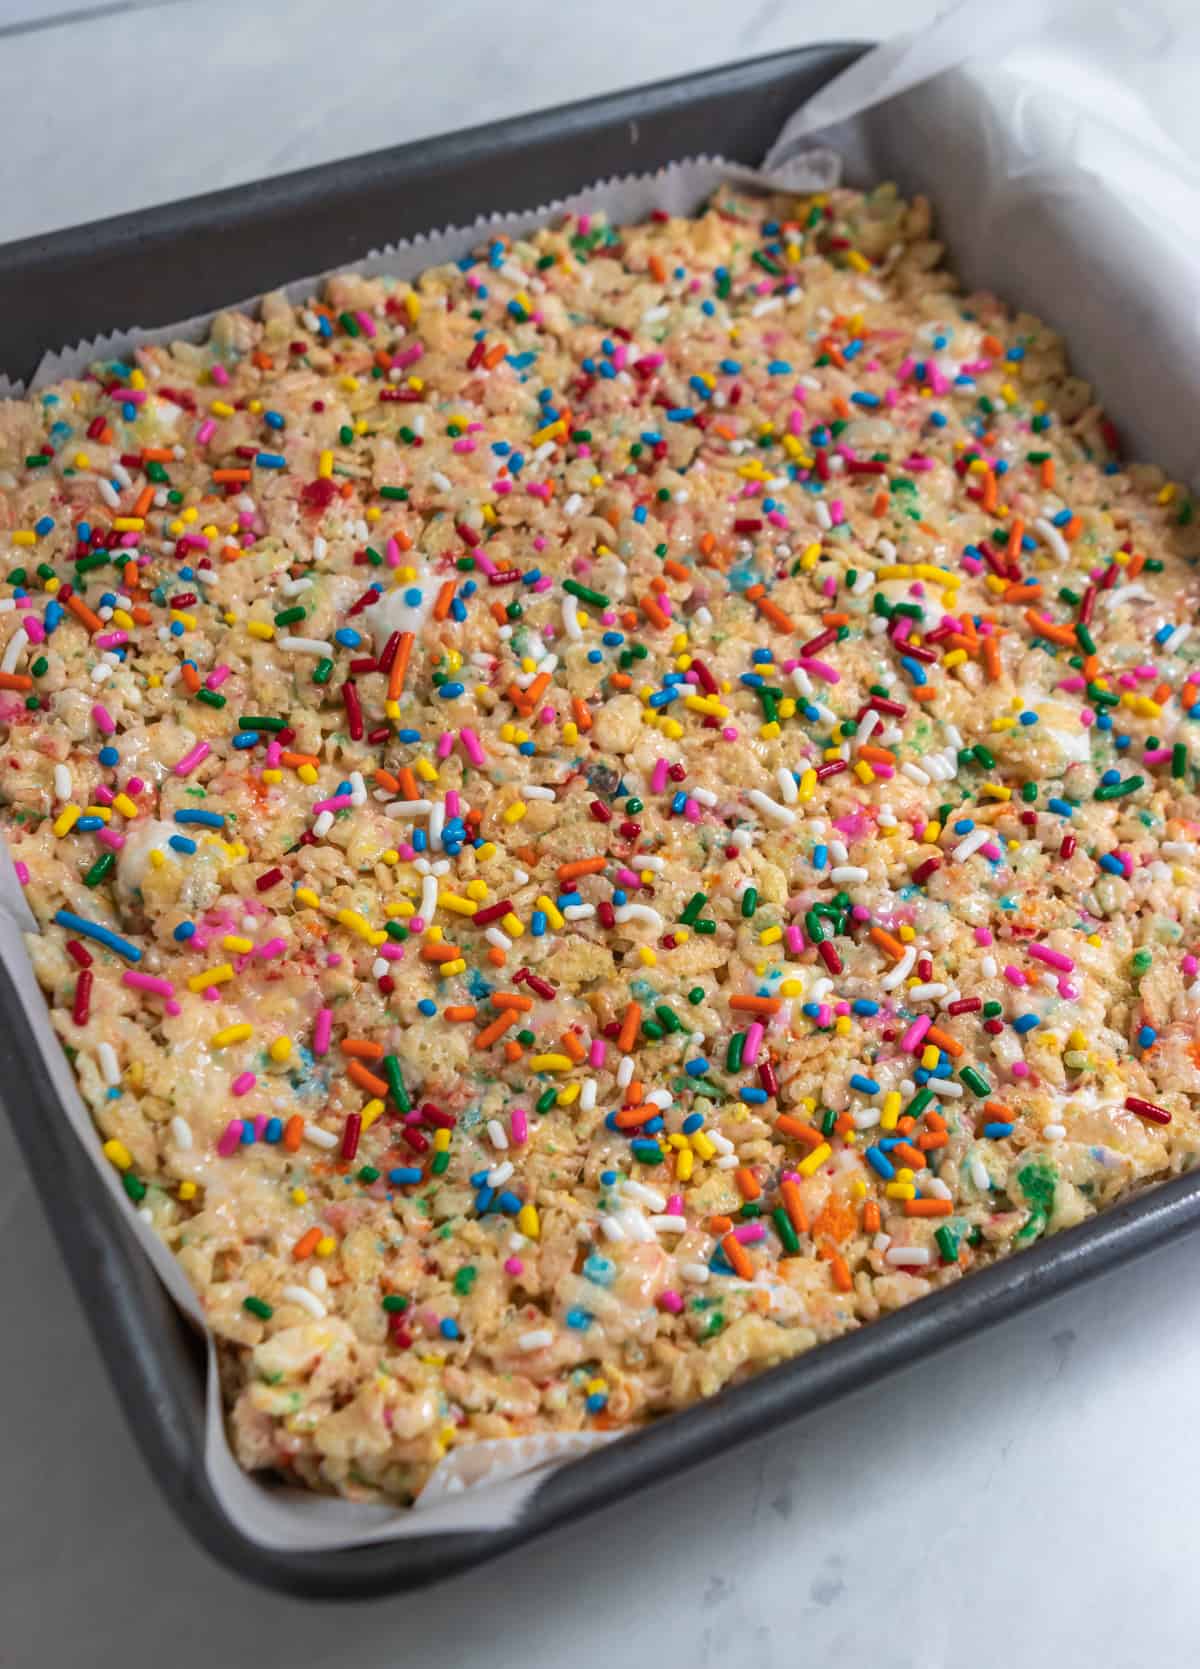 Pan with Rice Krispie Treats and rainbow sprinkles on top.